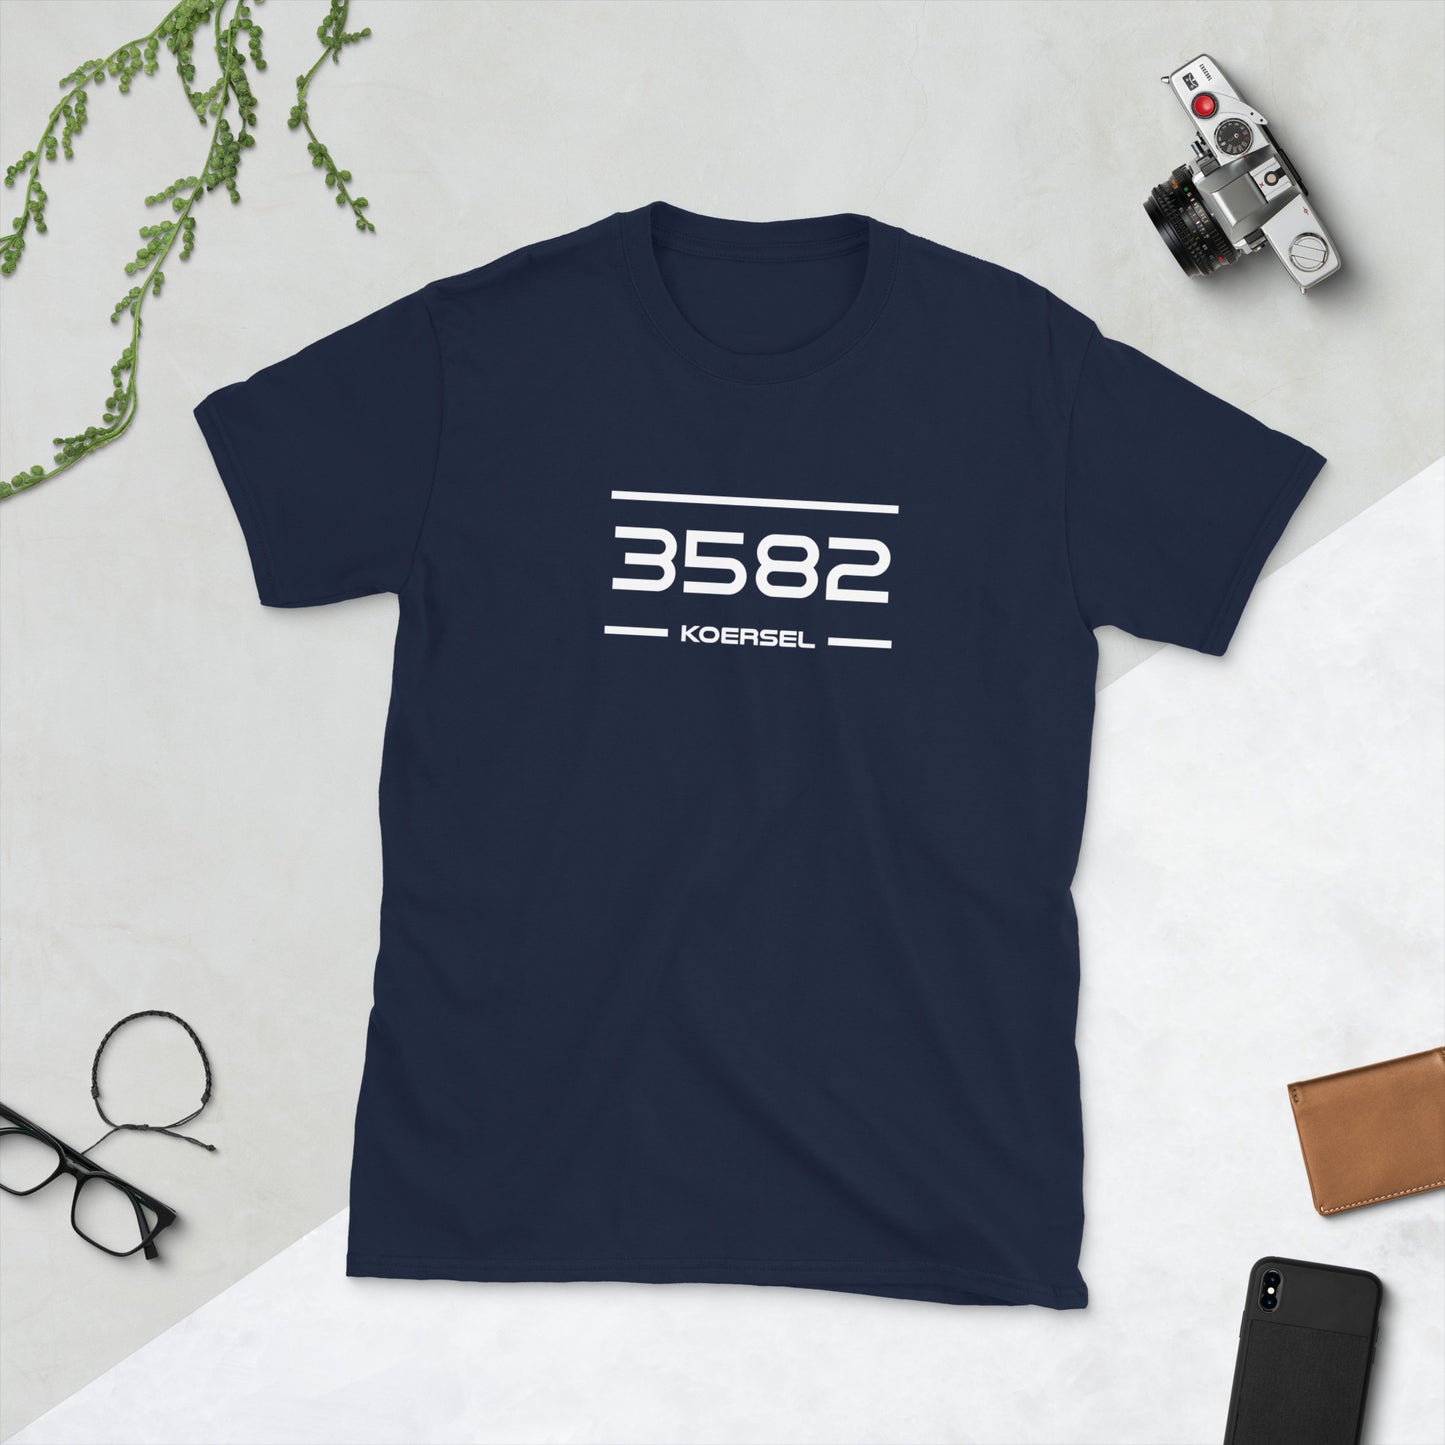 Tshirt - 3582 - Koersel